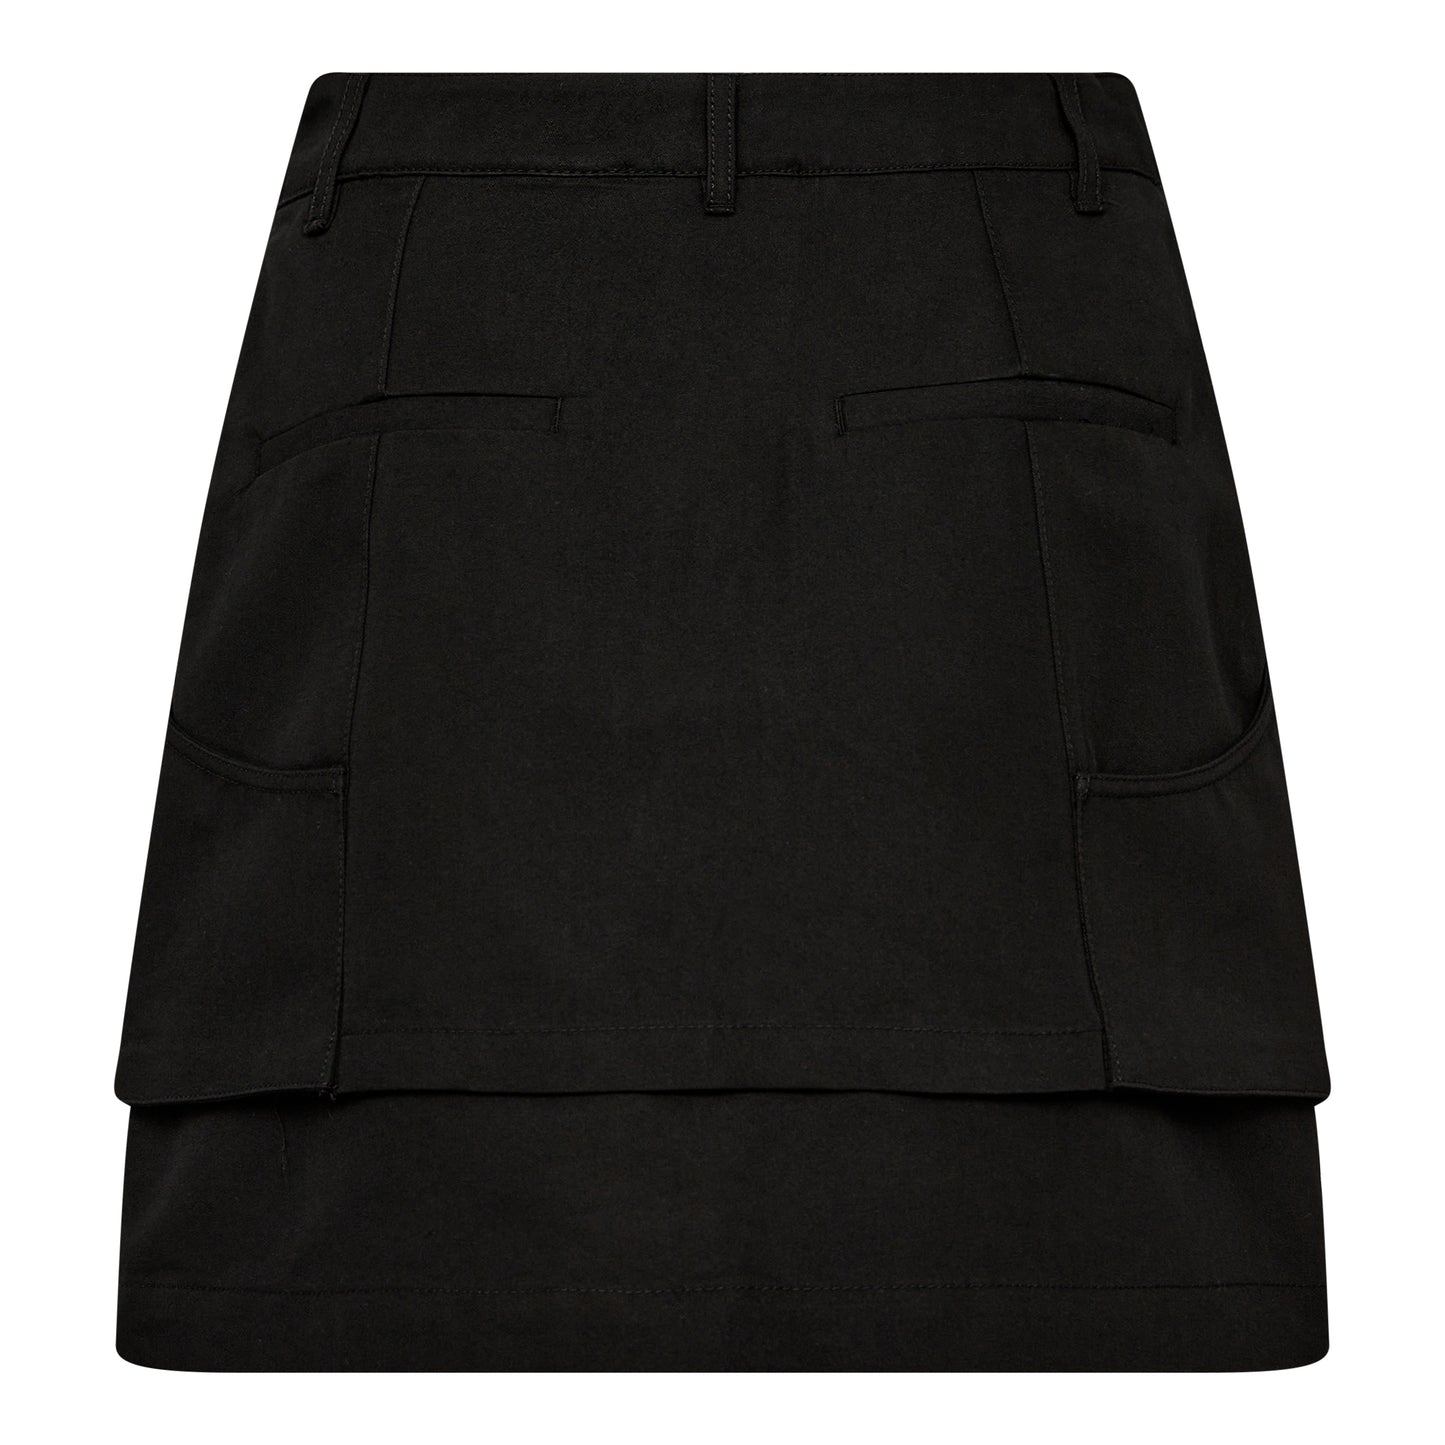 Cocouture - JenkinsCC Cargo Skirt - Black